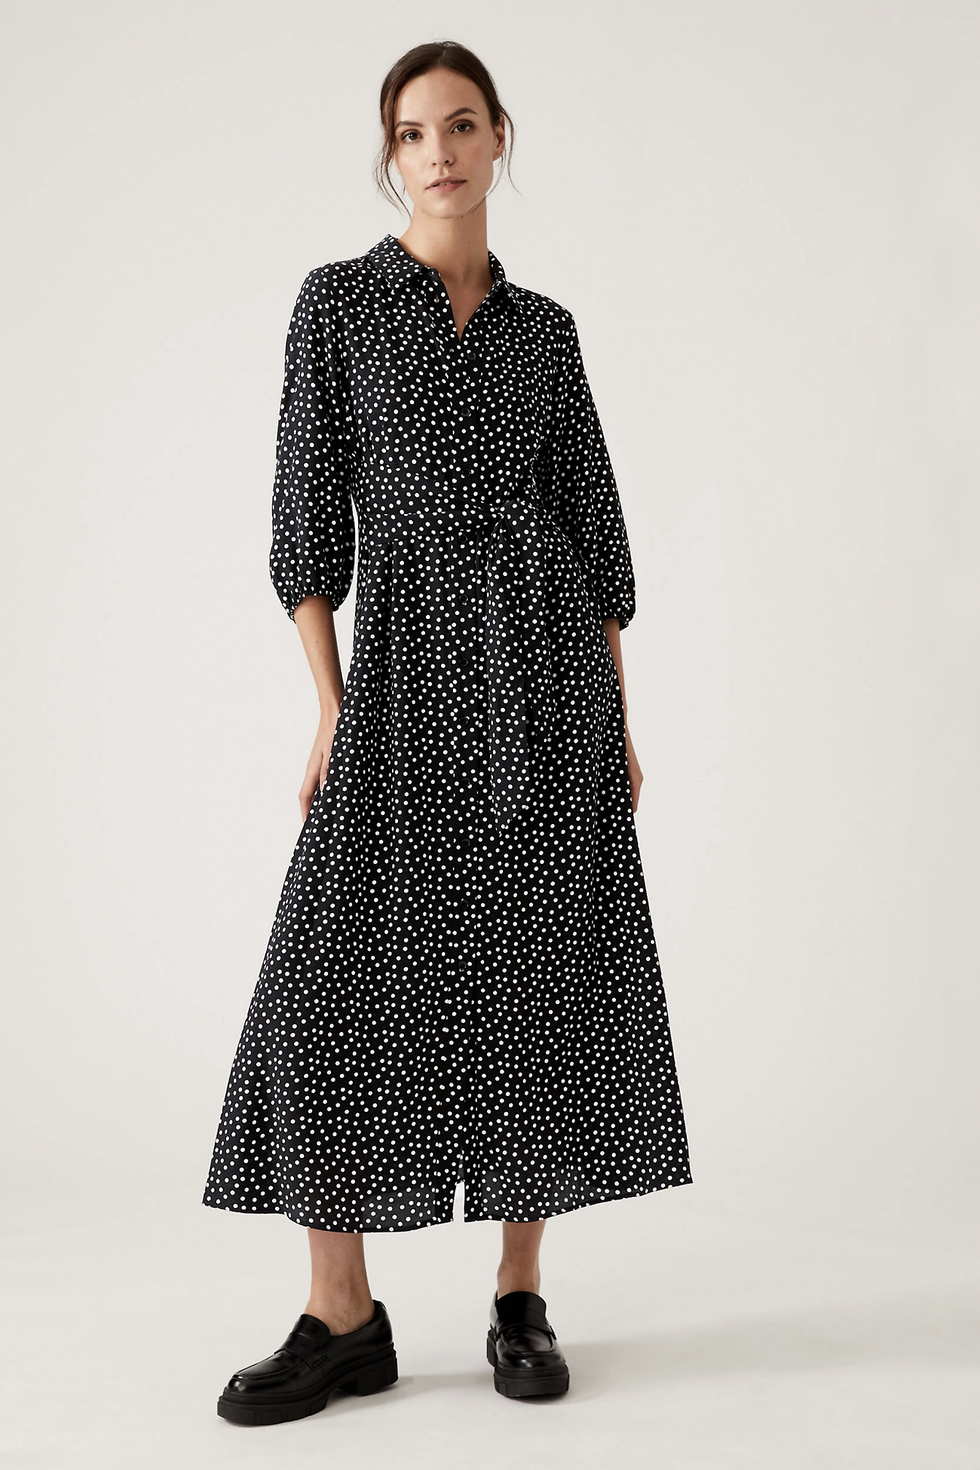 Holly Willoughby wears a stunning LK Bennett polka dot dress